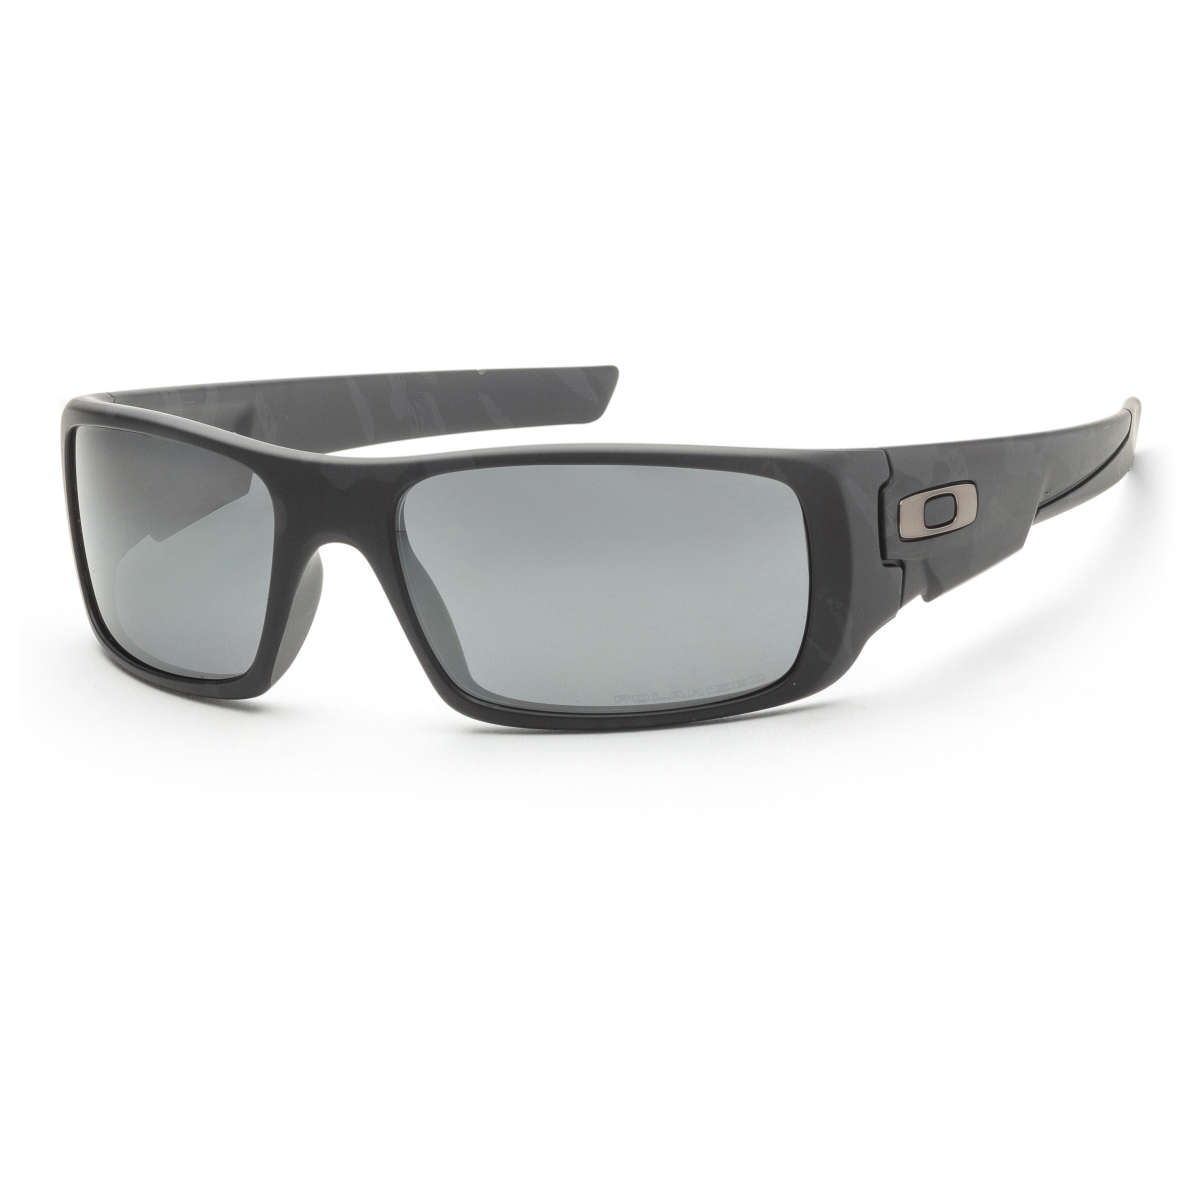 Oakley Men's Crankshaft Polarized Sunglasses (Shadow Camo) $50 + Free Shipping